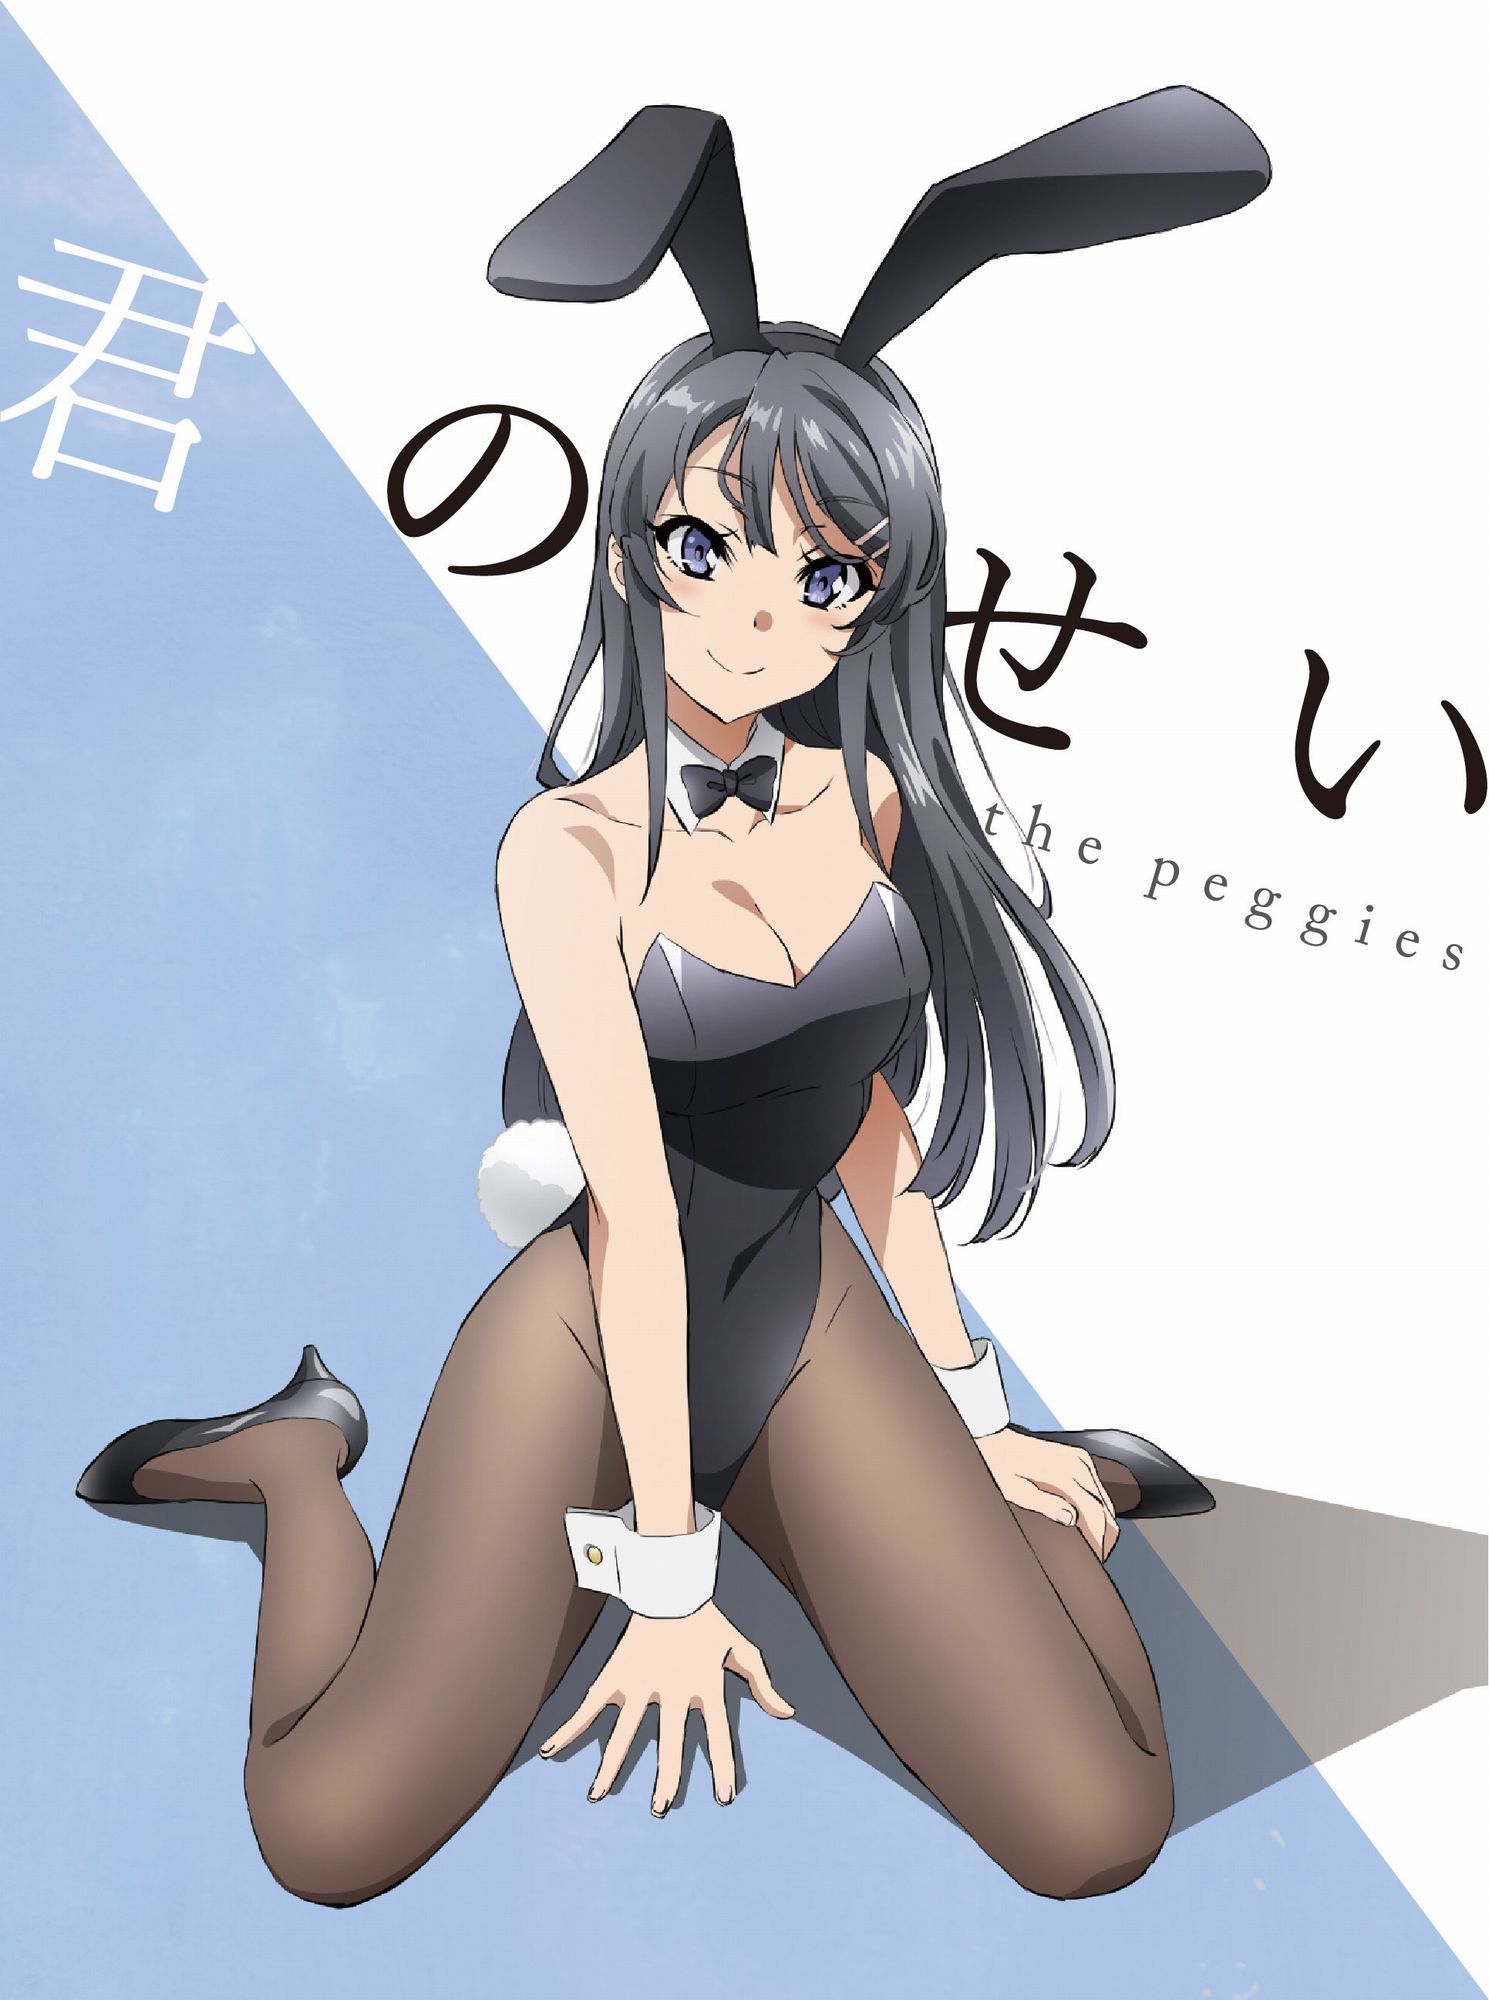 [Secondary/ZIP] Wild bunny girl mai sakurajima cute picture of the seniors "youth Pig does not dream of a senior Bunny girl" 49